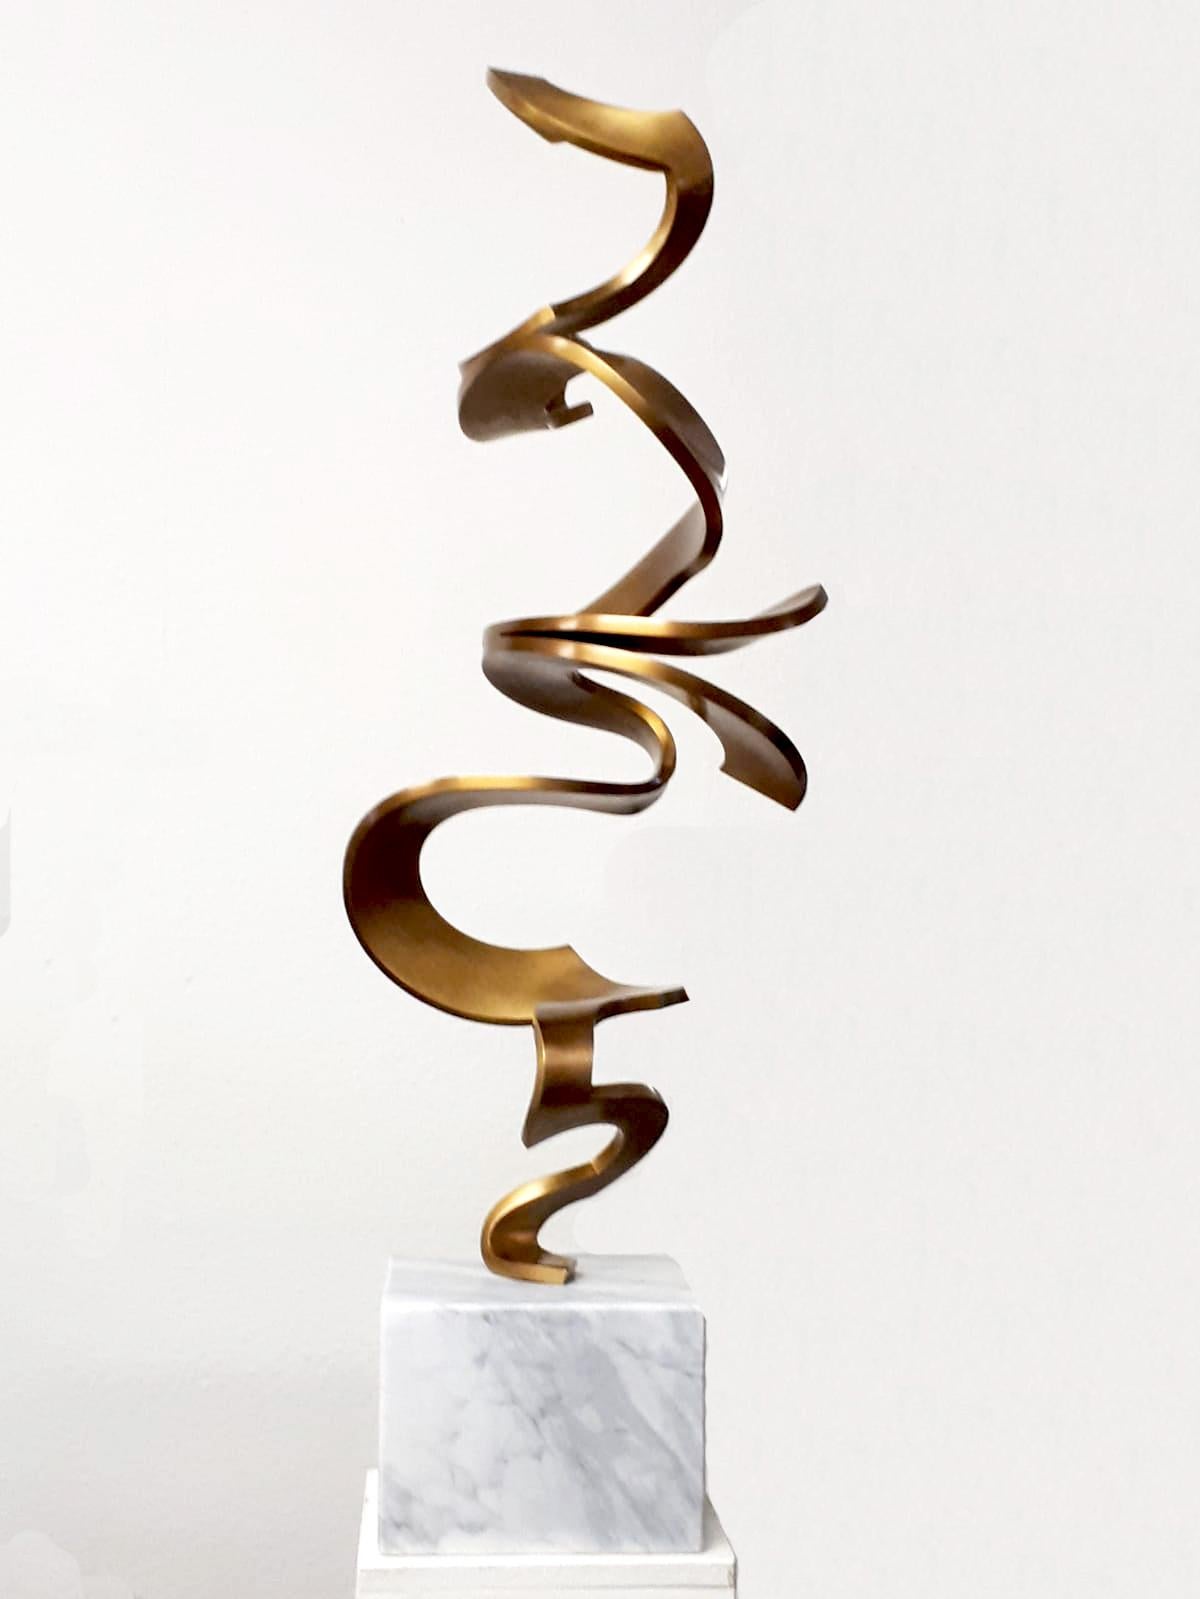 Artist: Kuno Vollet

Title: Schwerelos Gold

Materials: Bronze sculpture with a dark patina on black granite base

Size: 65cm height of upper sculpture, base: 18 x 18 cm x 8 cm 

Limited Edition of 15
